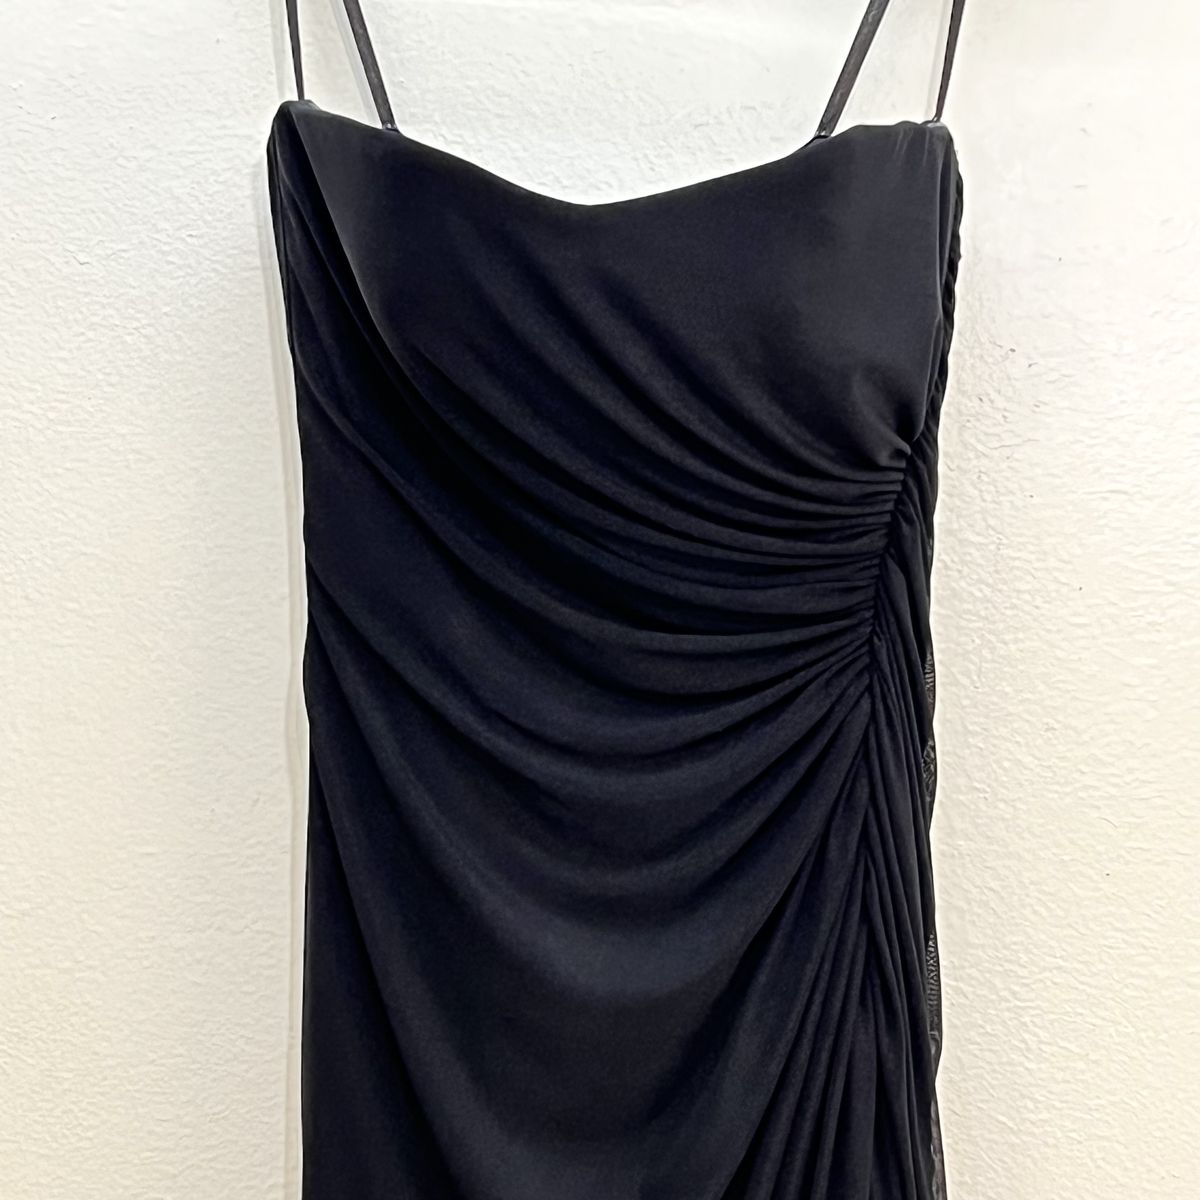 Style 29489 La Femme Size 6 Strapless Black Side Slit Dress on Queenly